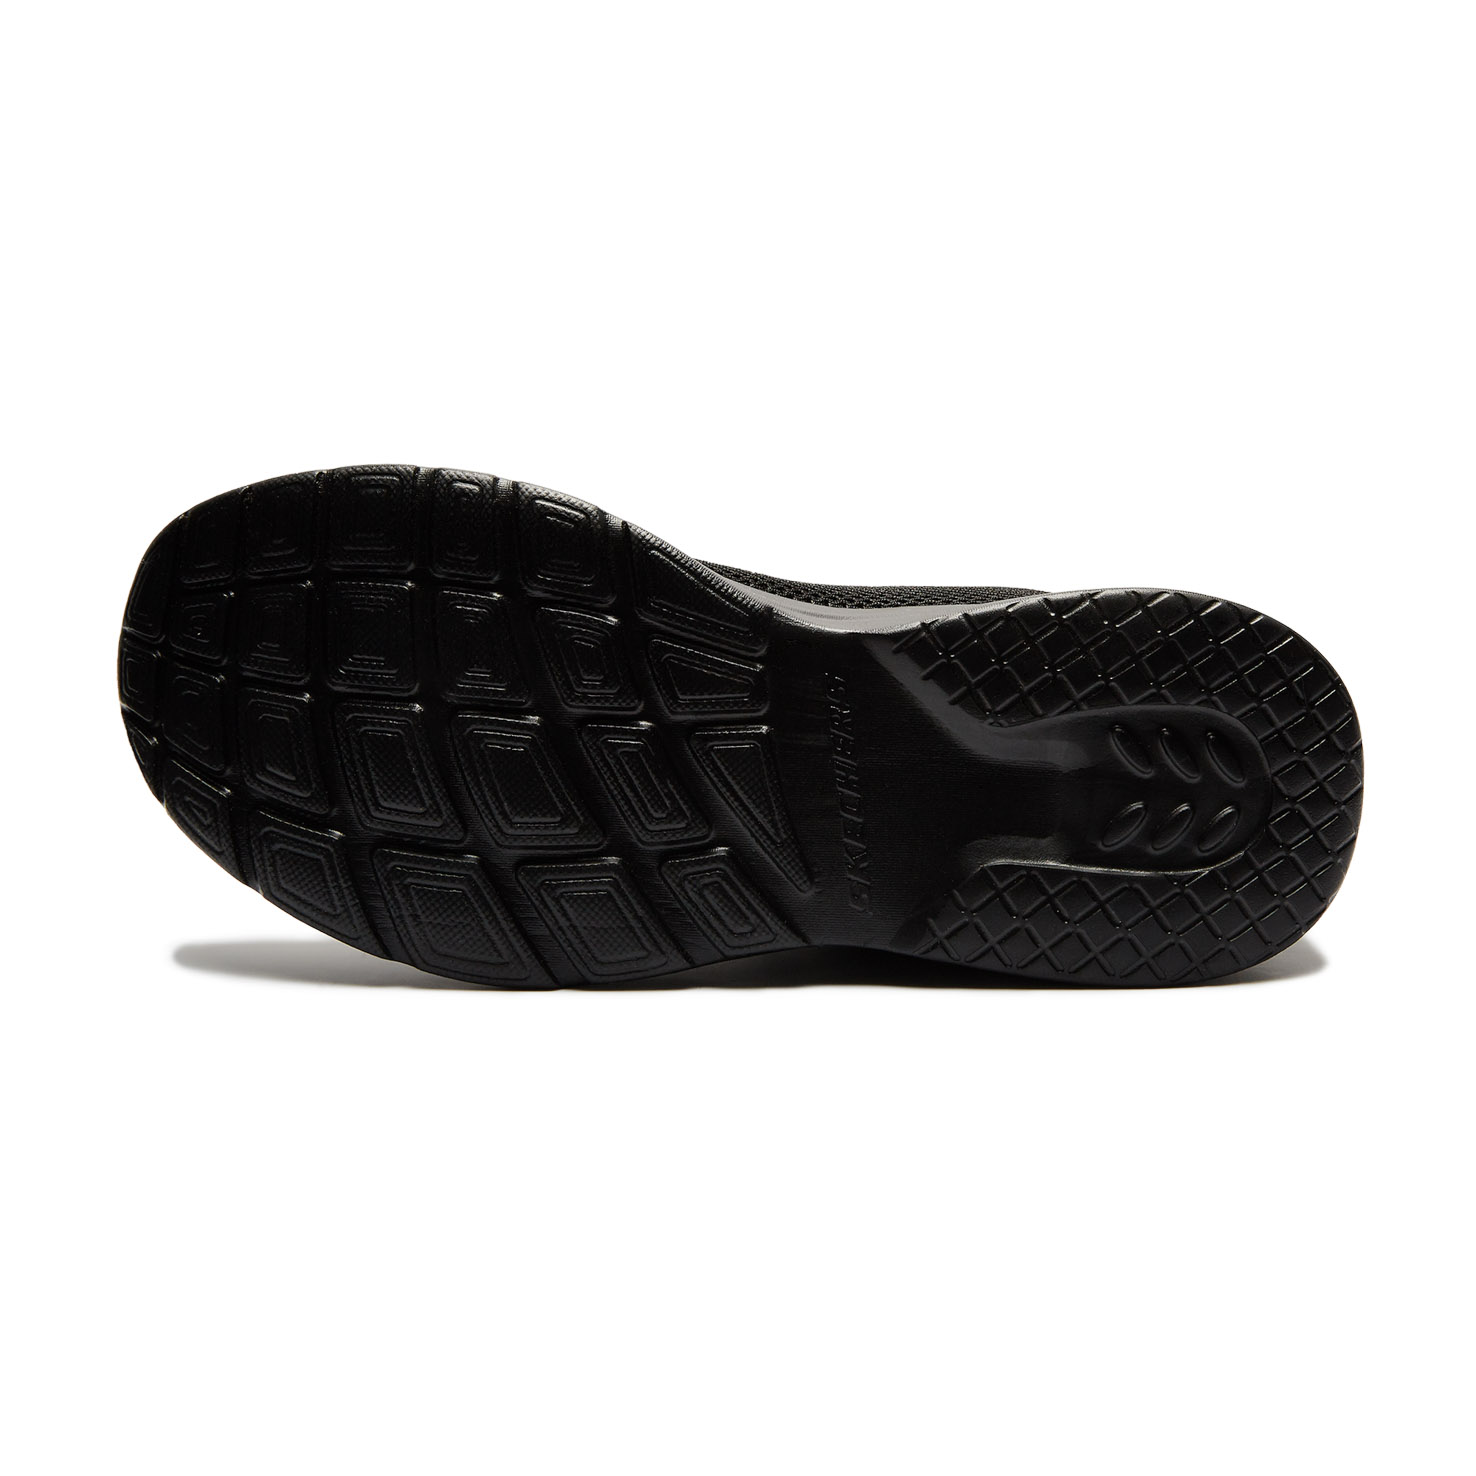 Men's low shoes SKECHERS, размер 40, цвет черный SK58362 - фото 6